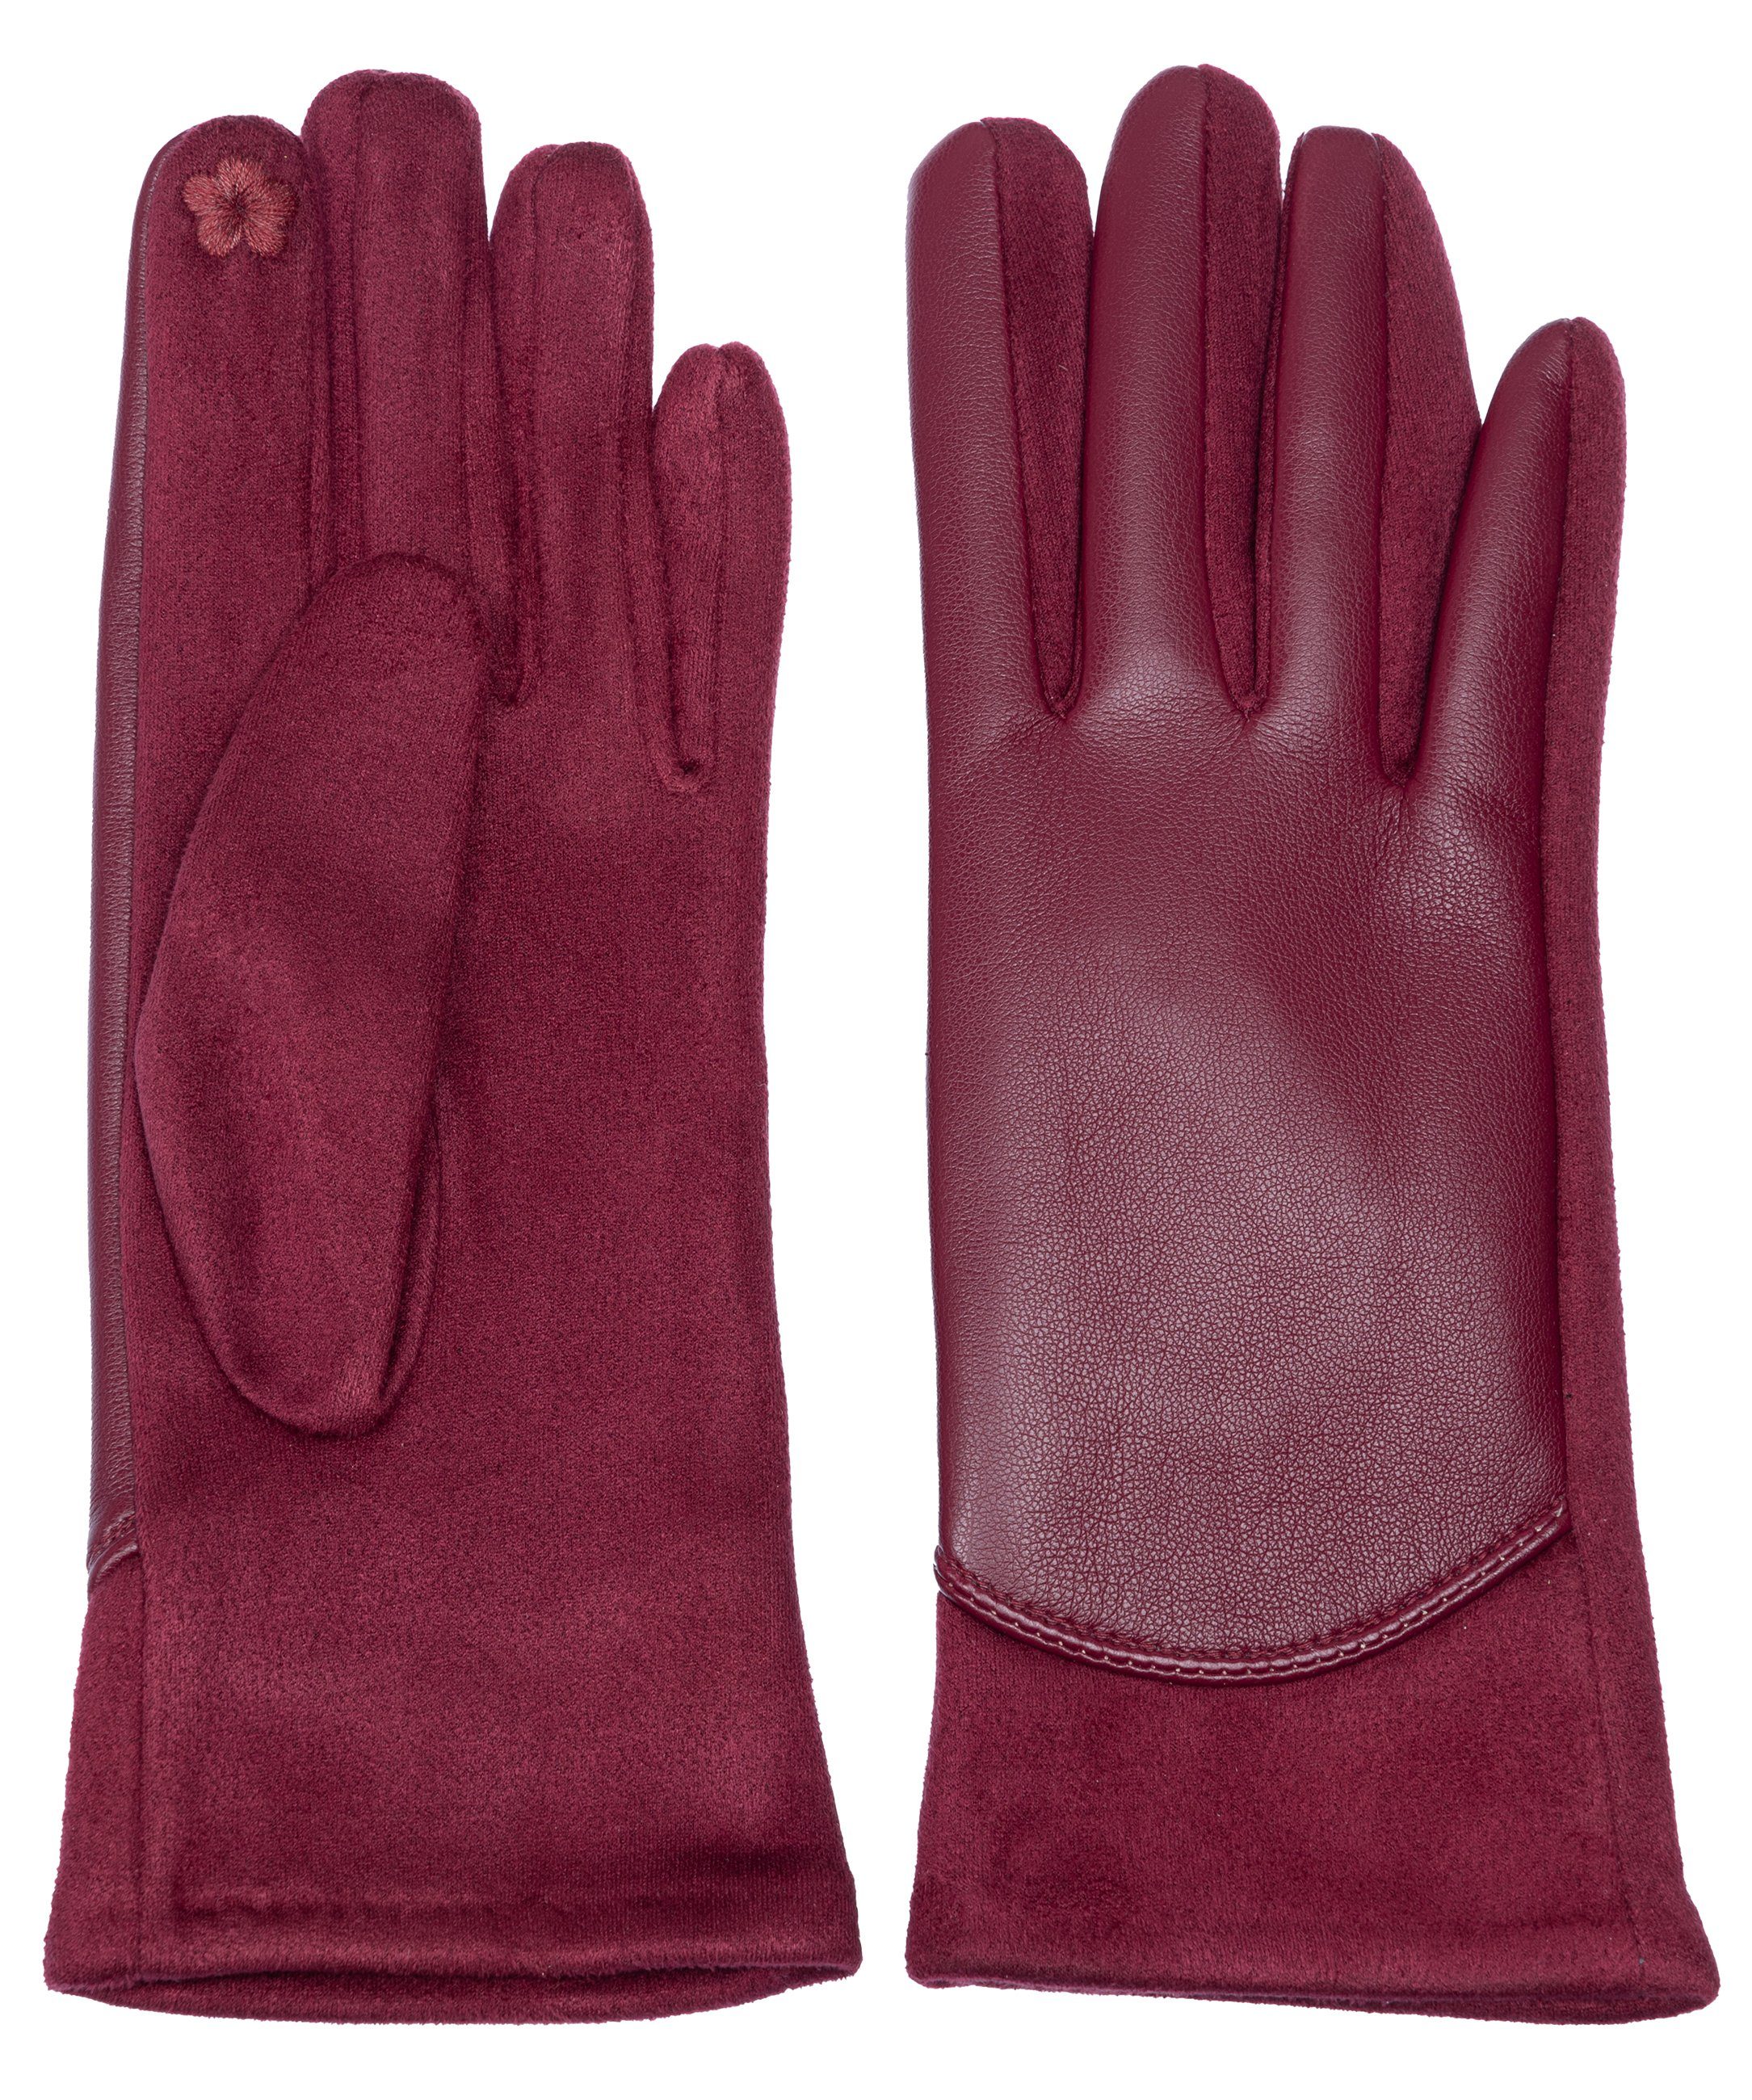 Caspar Strickhandschuhe GLV016 klassisch elegante uni Damen Handschuhe weinrot